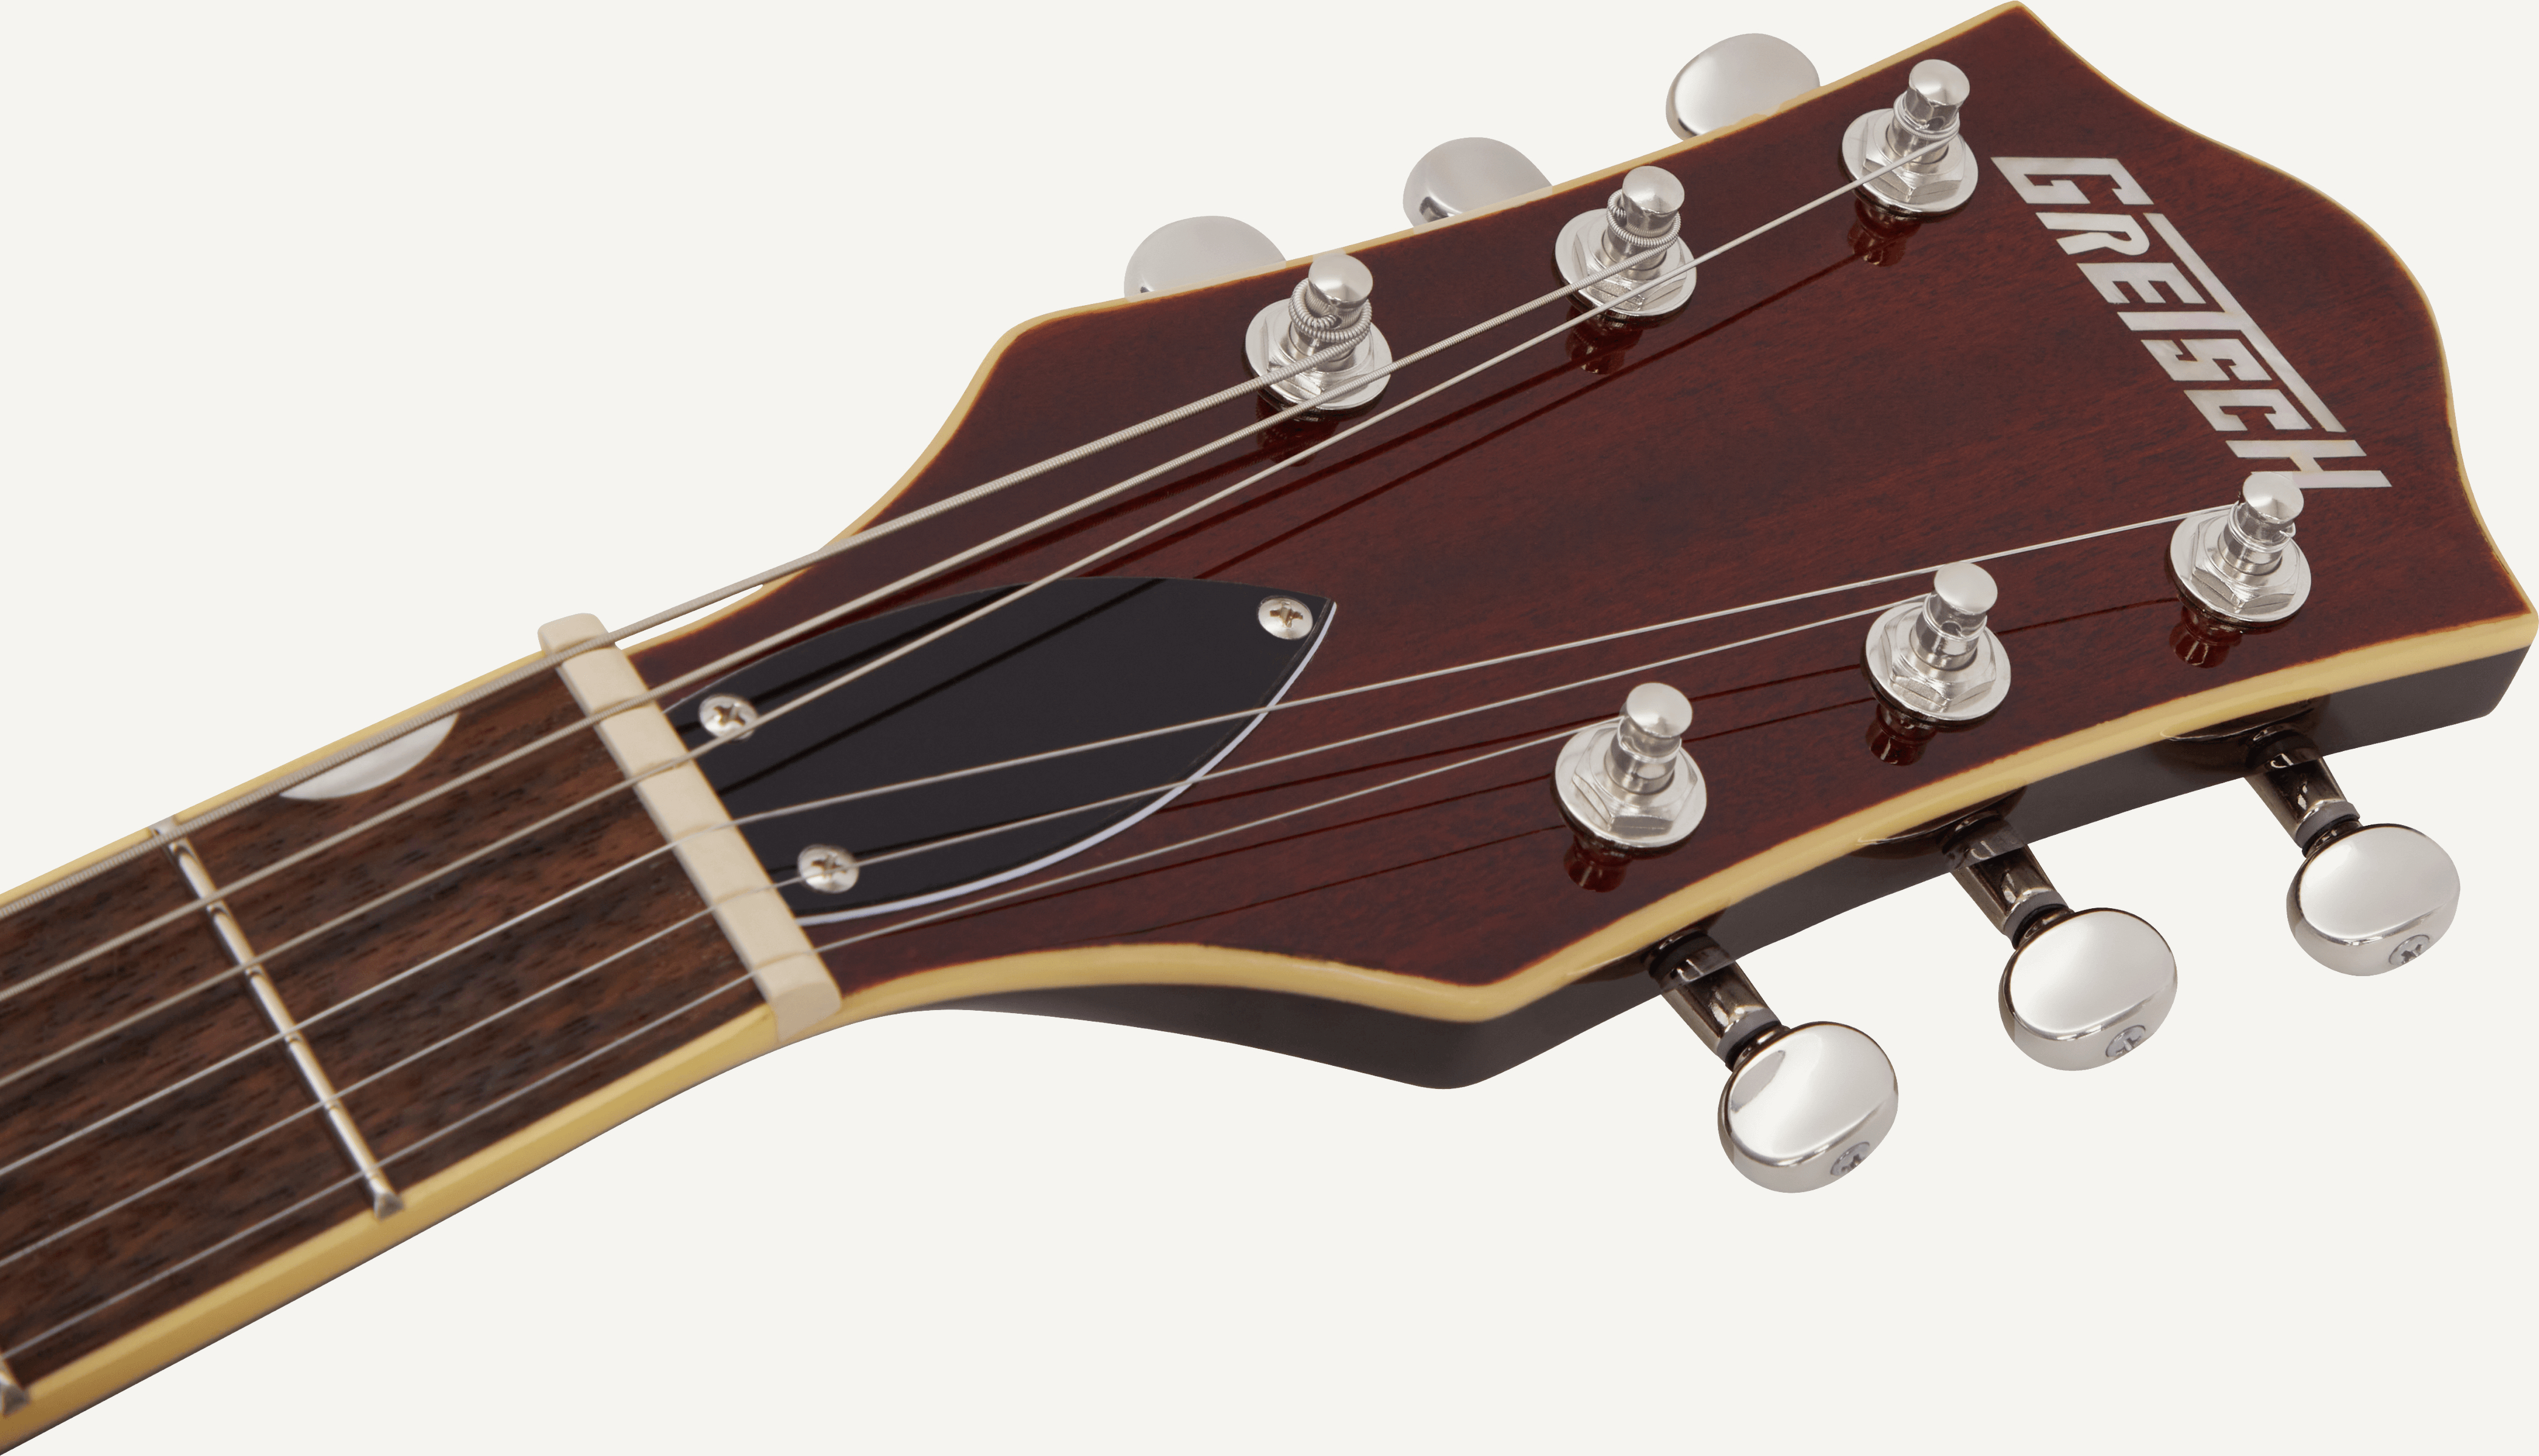 Gretsch G5622T Bigsby E-Gitarre LRL SBB